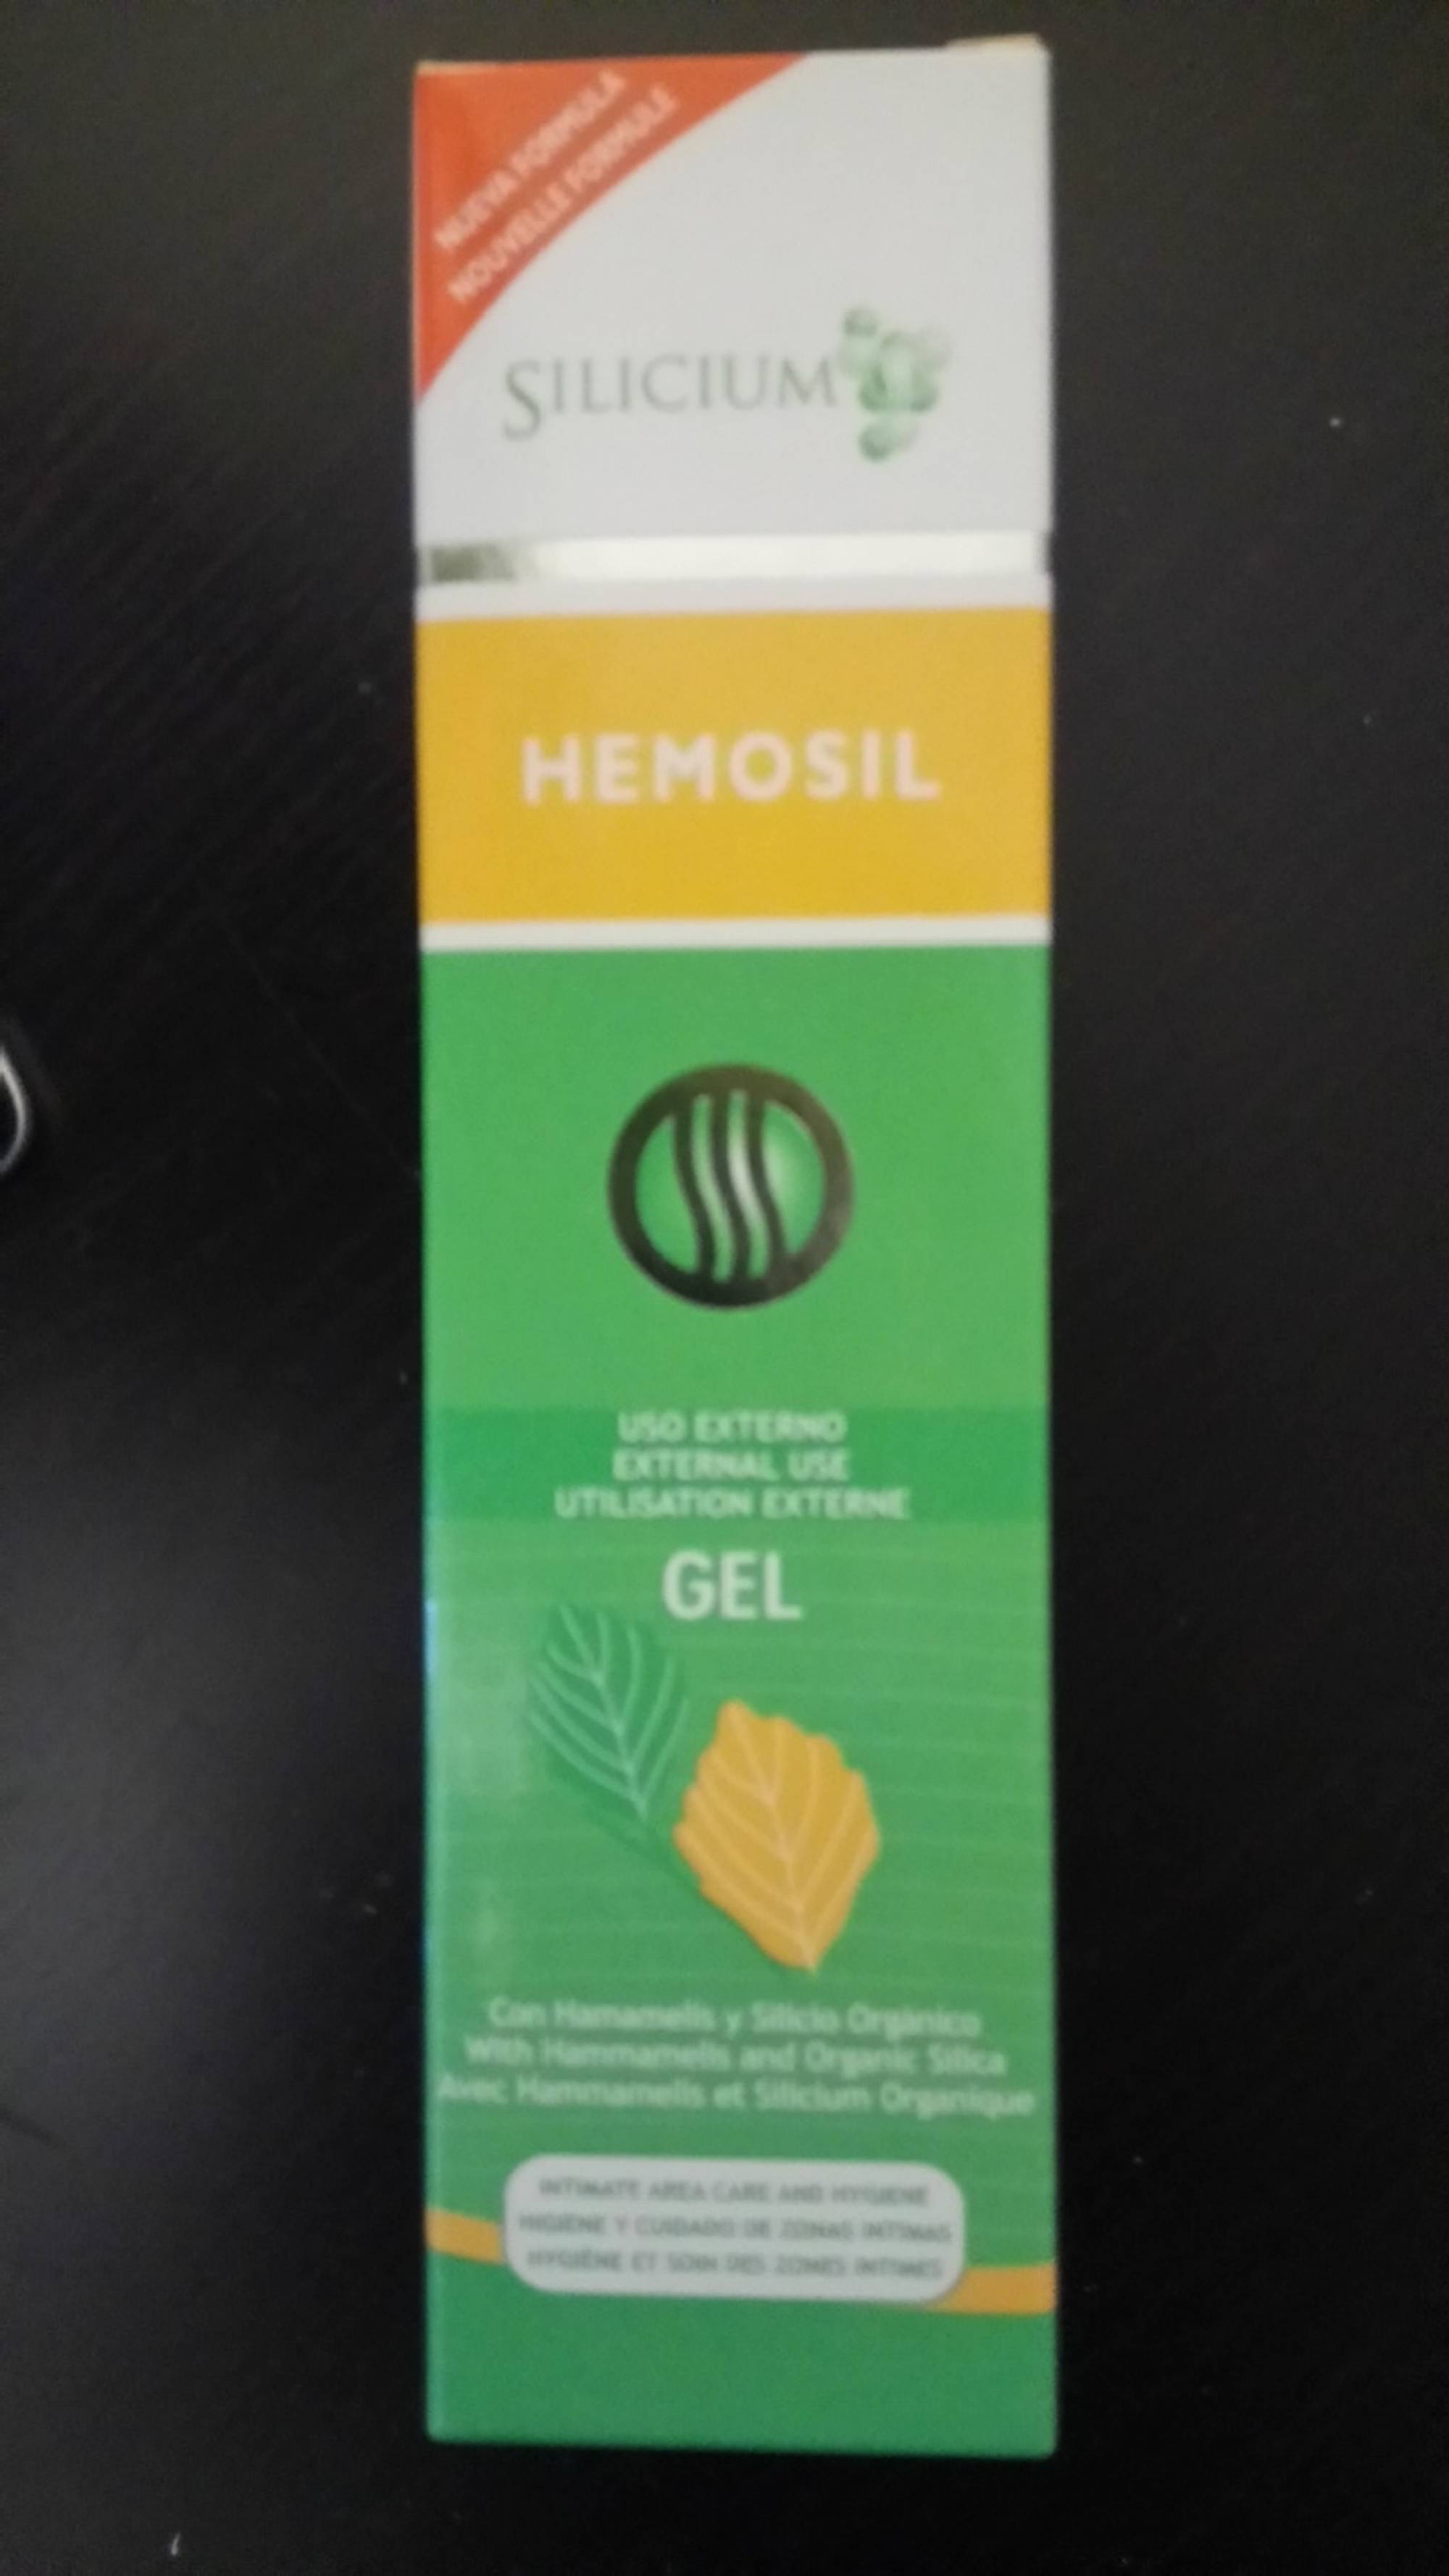 SILICIUM - Hemosil - Utulisation externe gel